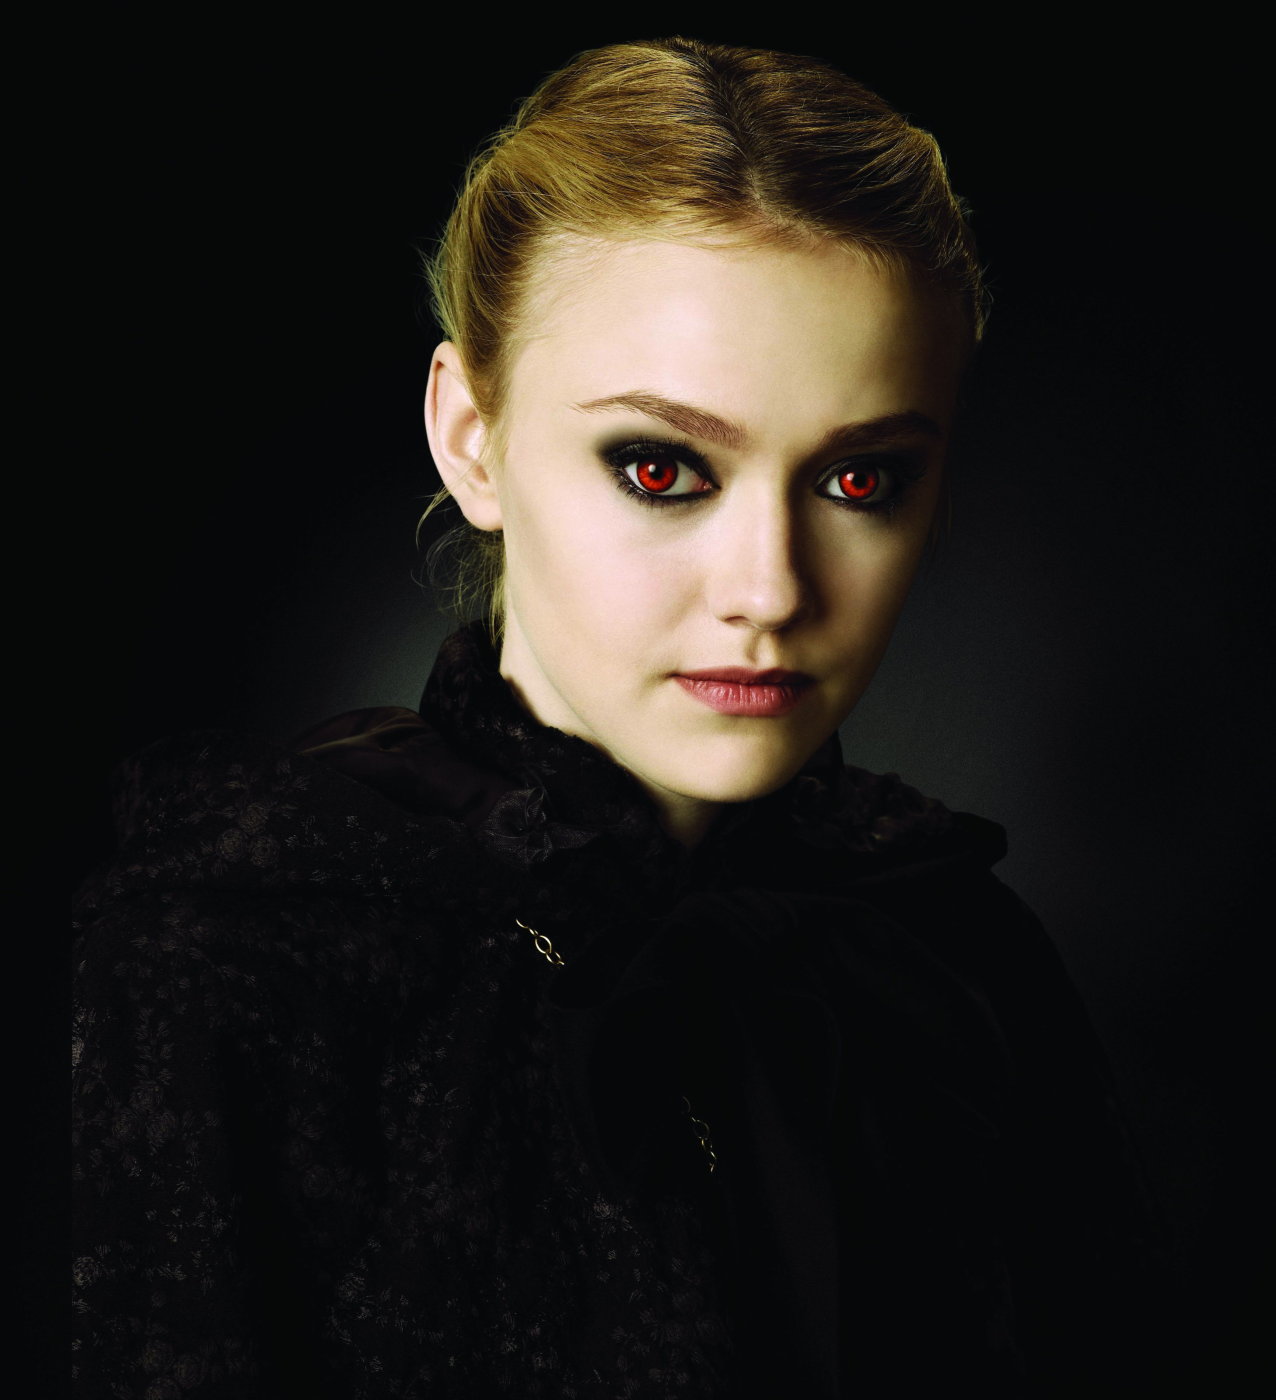 Dakota Fanning in The Twilight Saga: New Moon